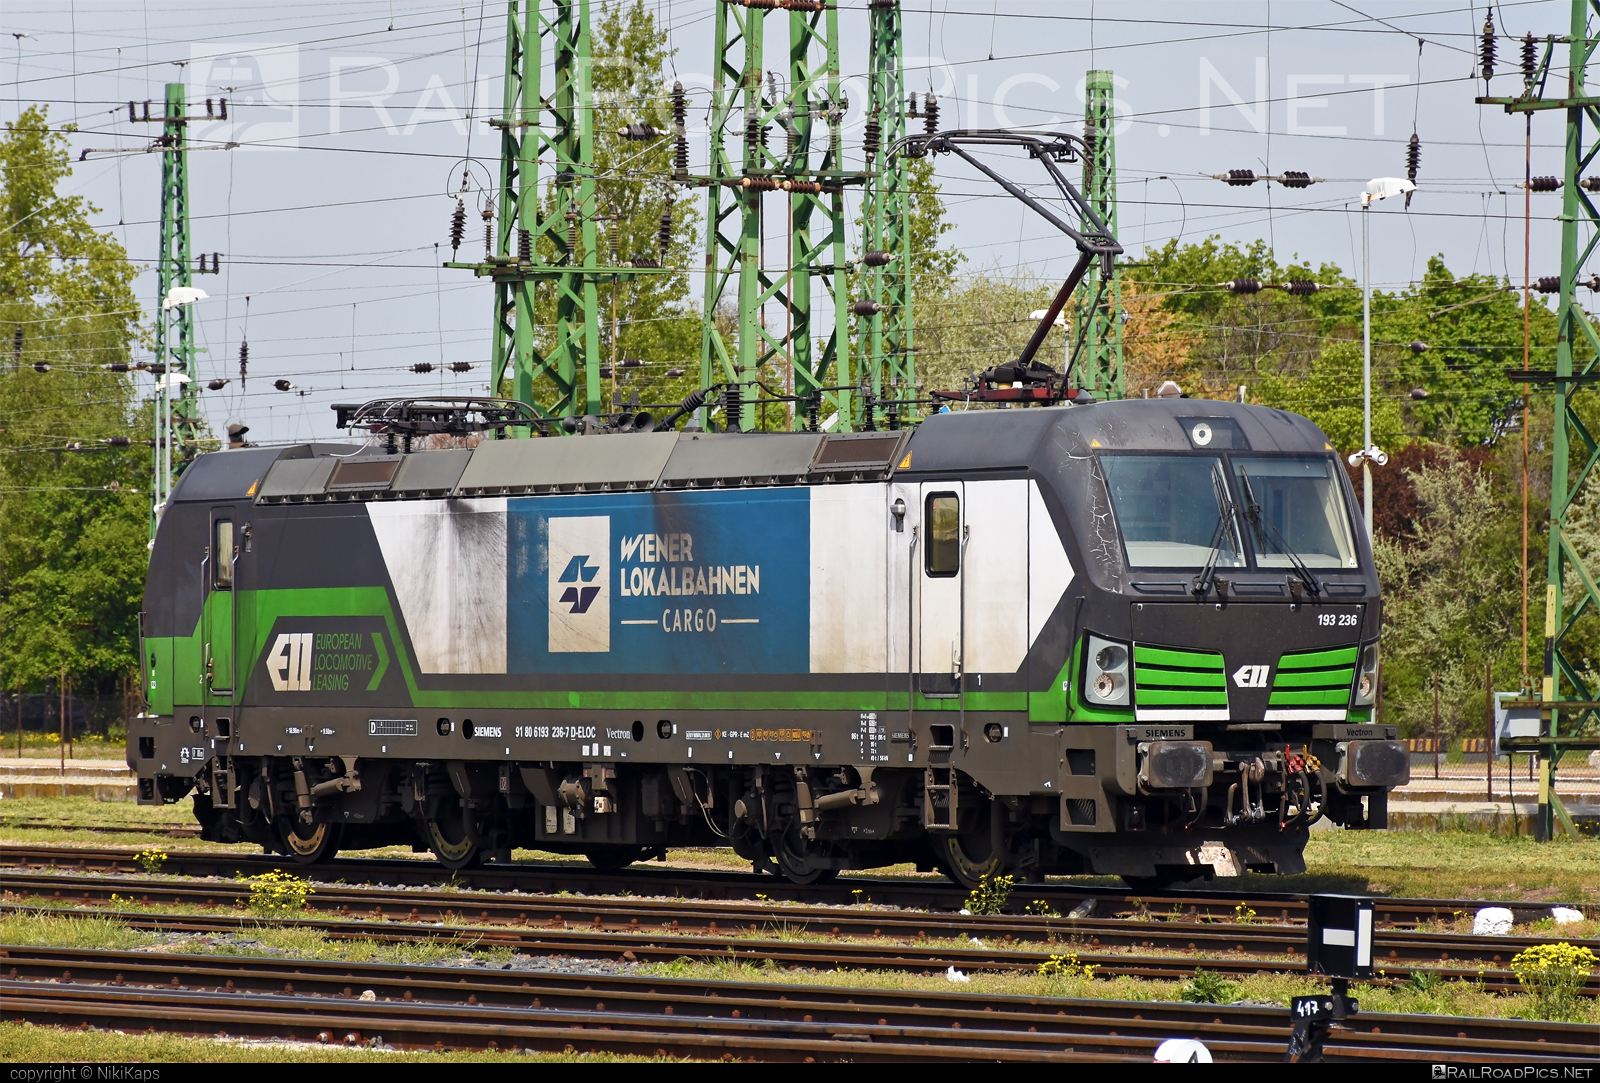 Siemens Vectron AC - 193 236 operated by Wiener Lokalbahnen Cargo GmbH #ell #ellgermany #eloc #europeanlocomotiveleasing #siemens #siemensVectron #siemensVectronAC #vectron #vectronAC #wienerlokalbahnencargo #wienerlokalbahnencargogmbh #wlc